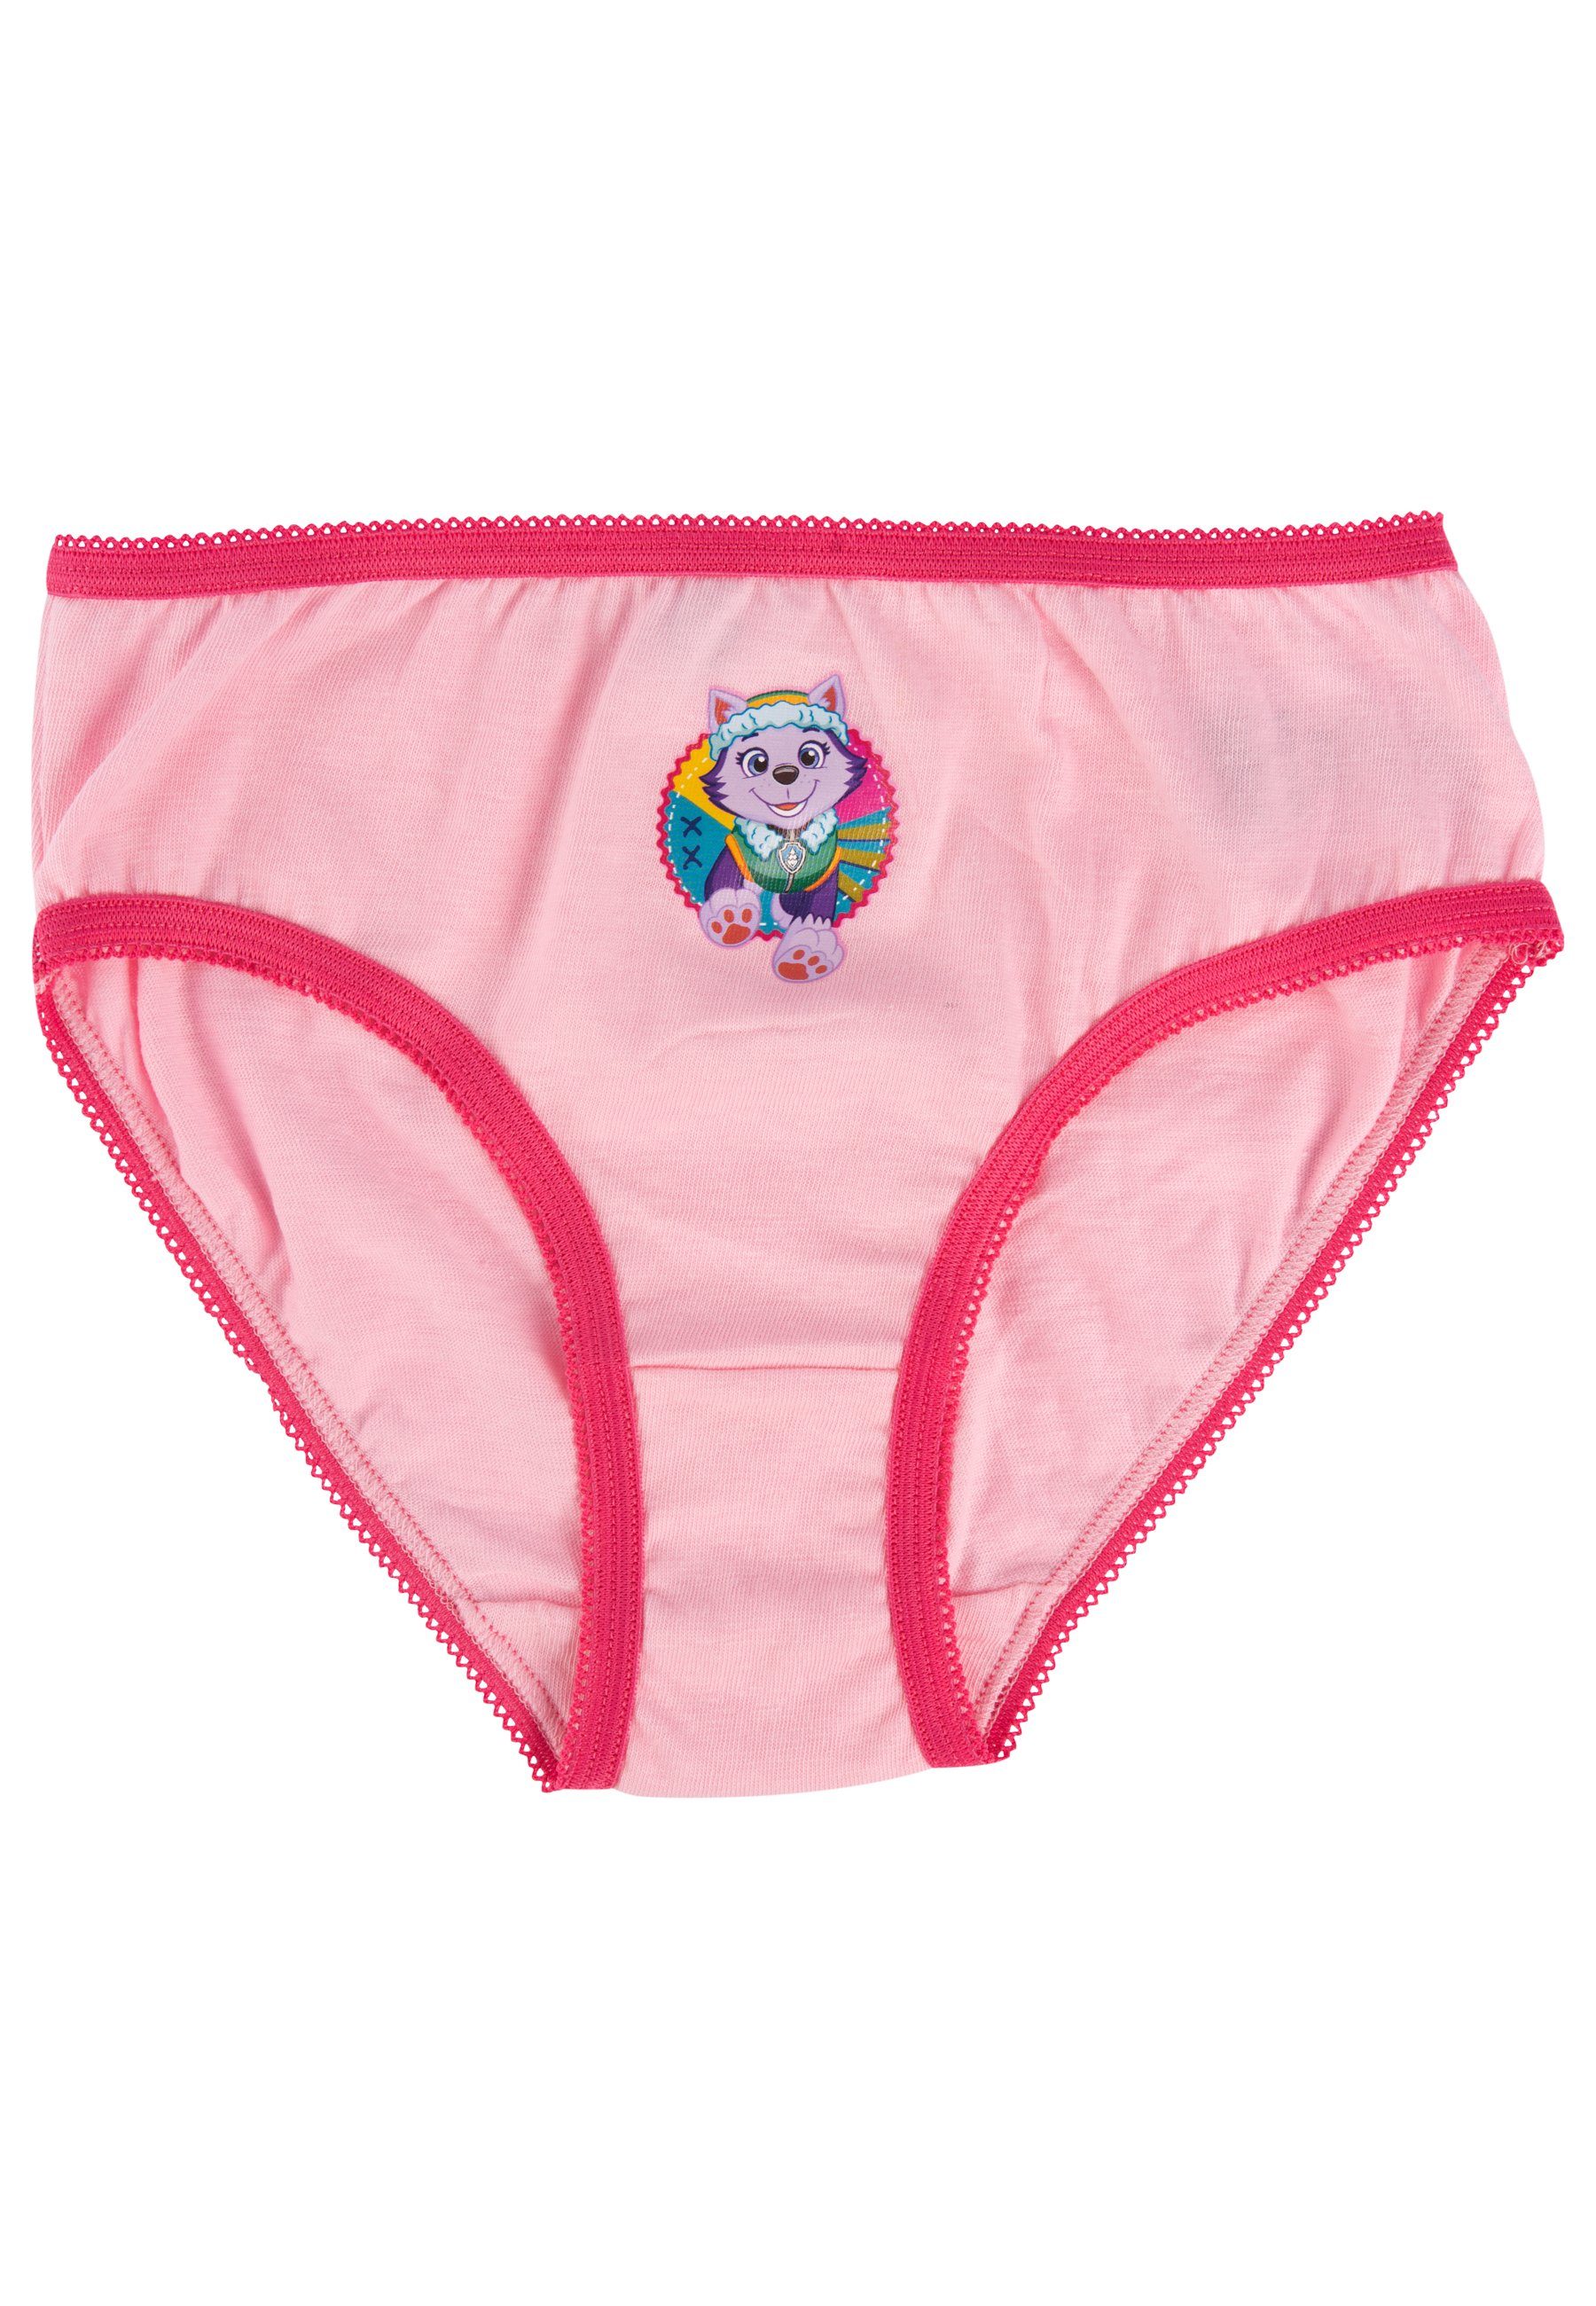 Unterhose Mädchen United für Panty Pack) Paw Rosa/Pink Labels® Patrol (2er